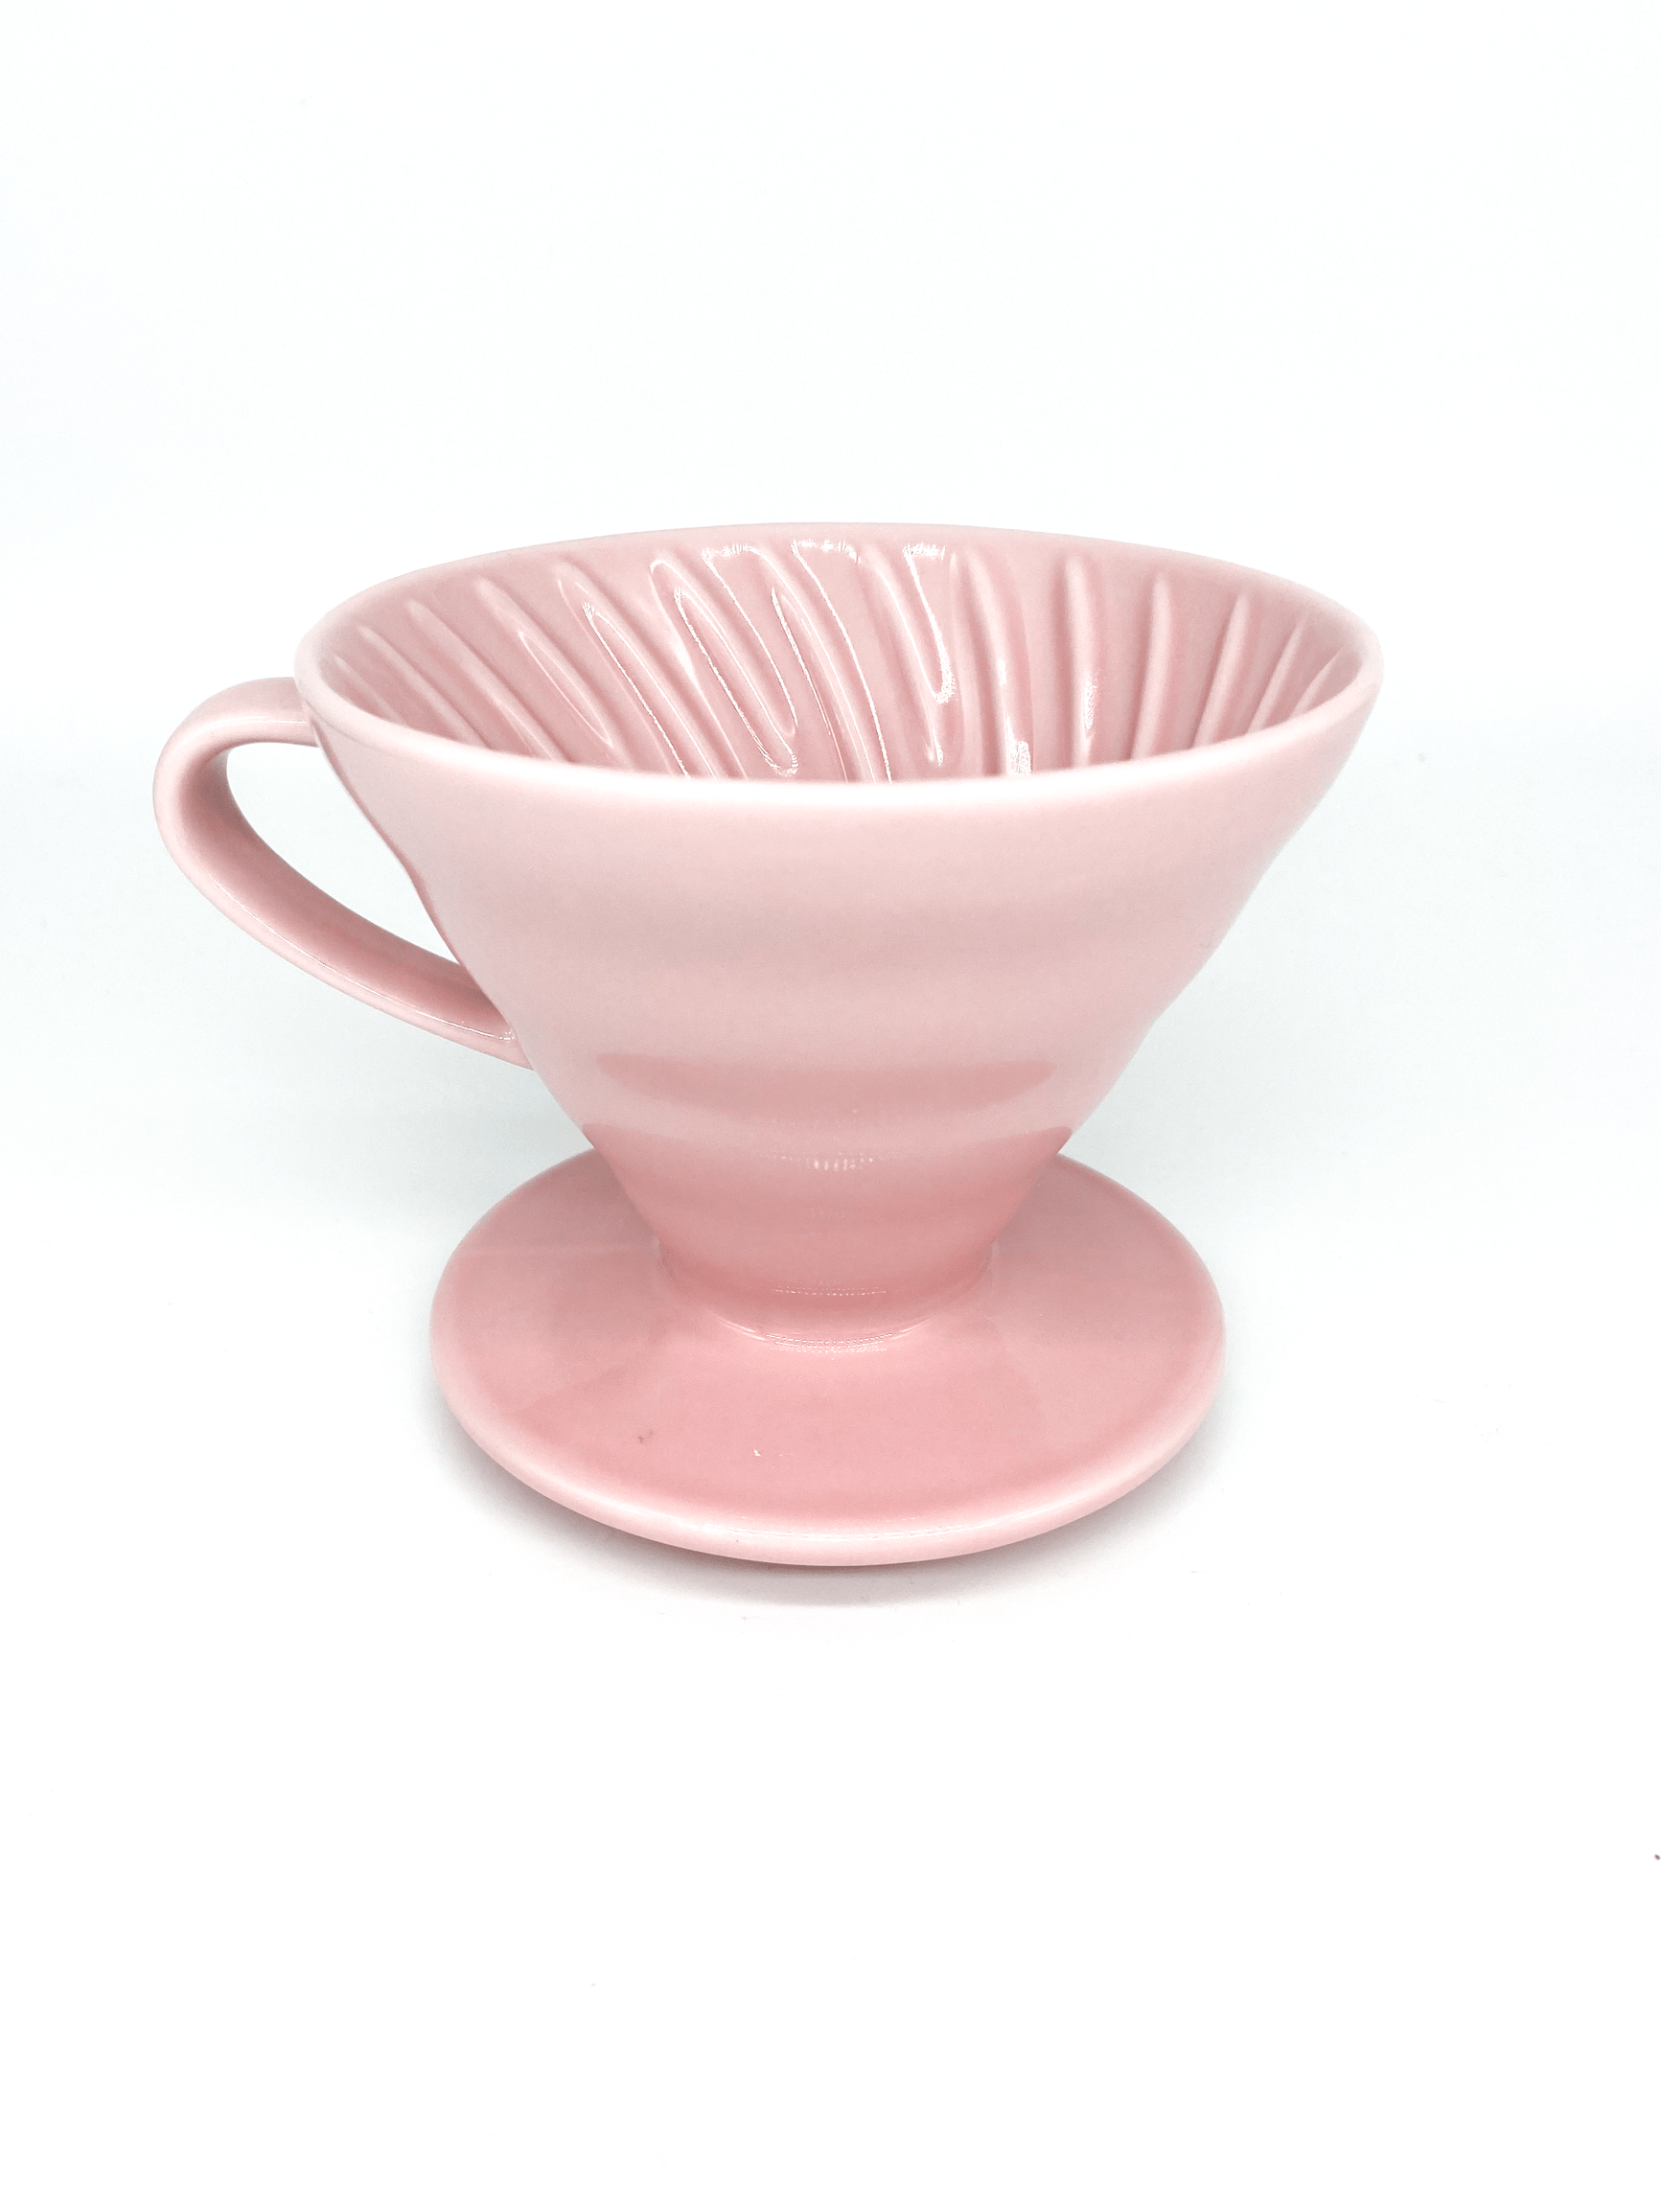 Hario V60 Ceramic Dripper Pink - MIMI+MARTHA